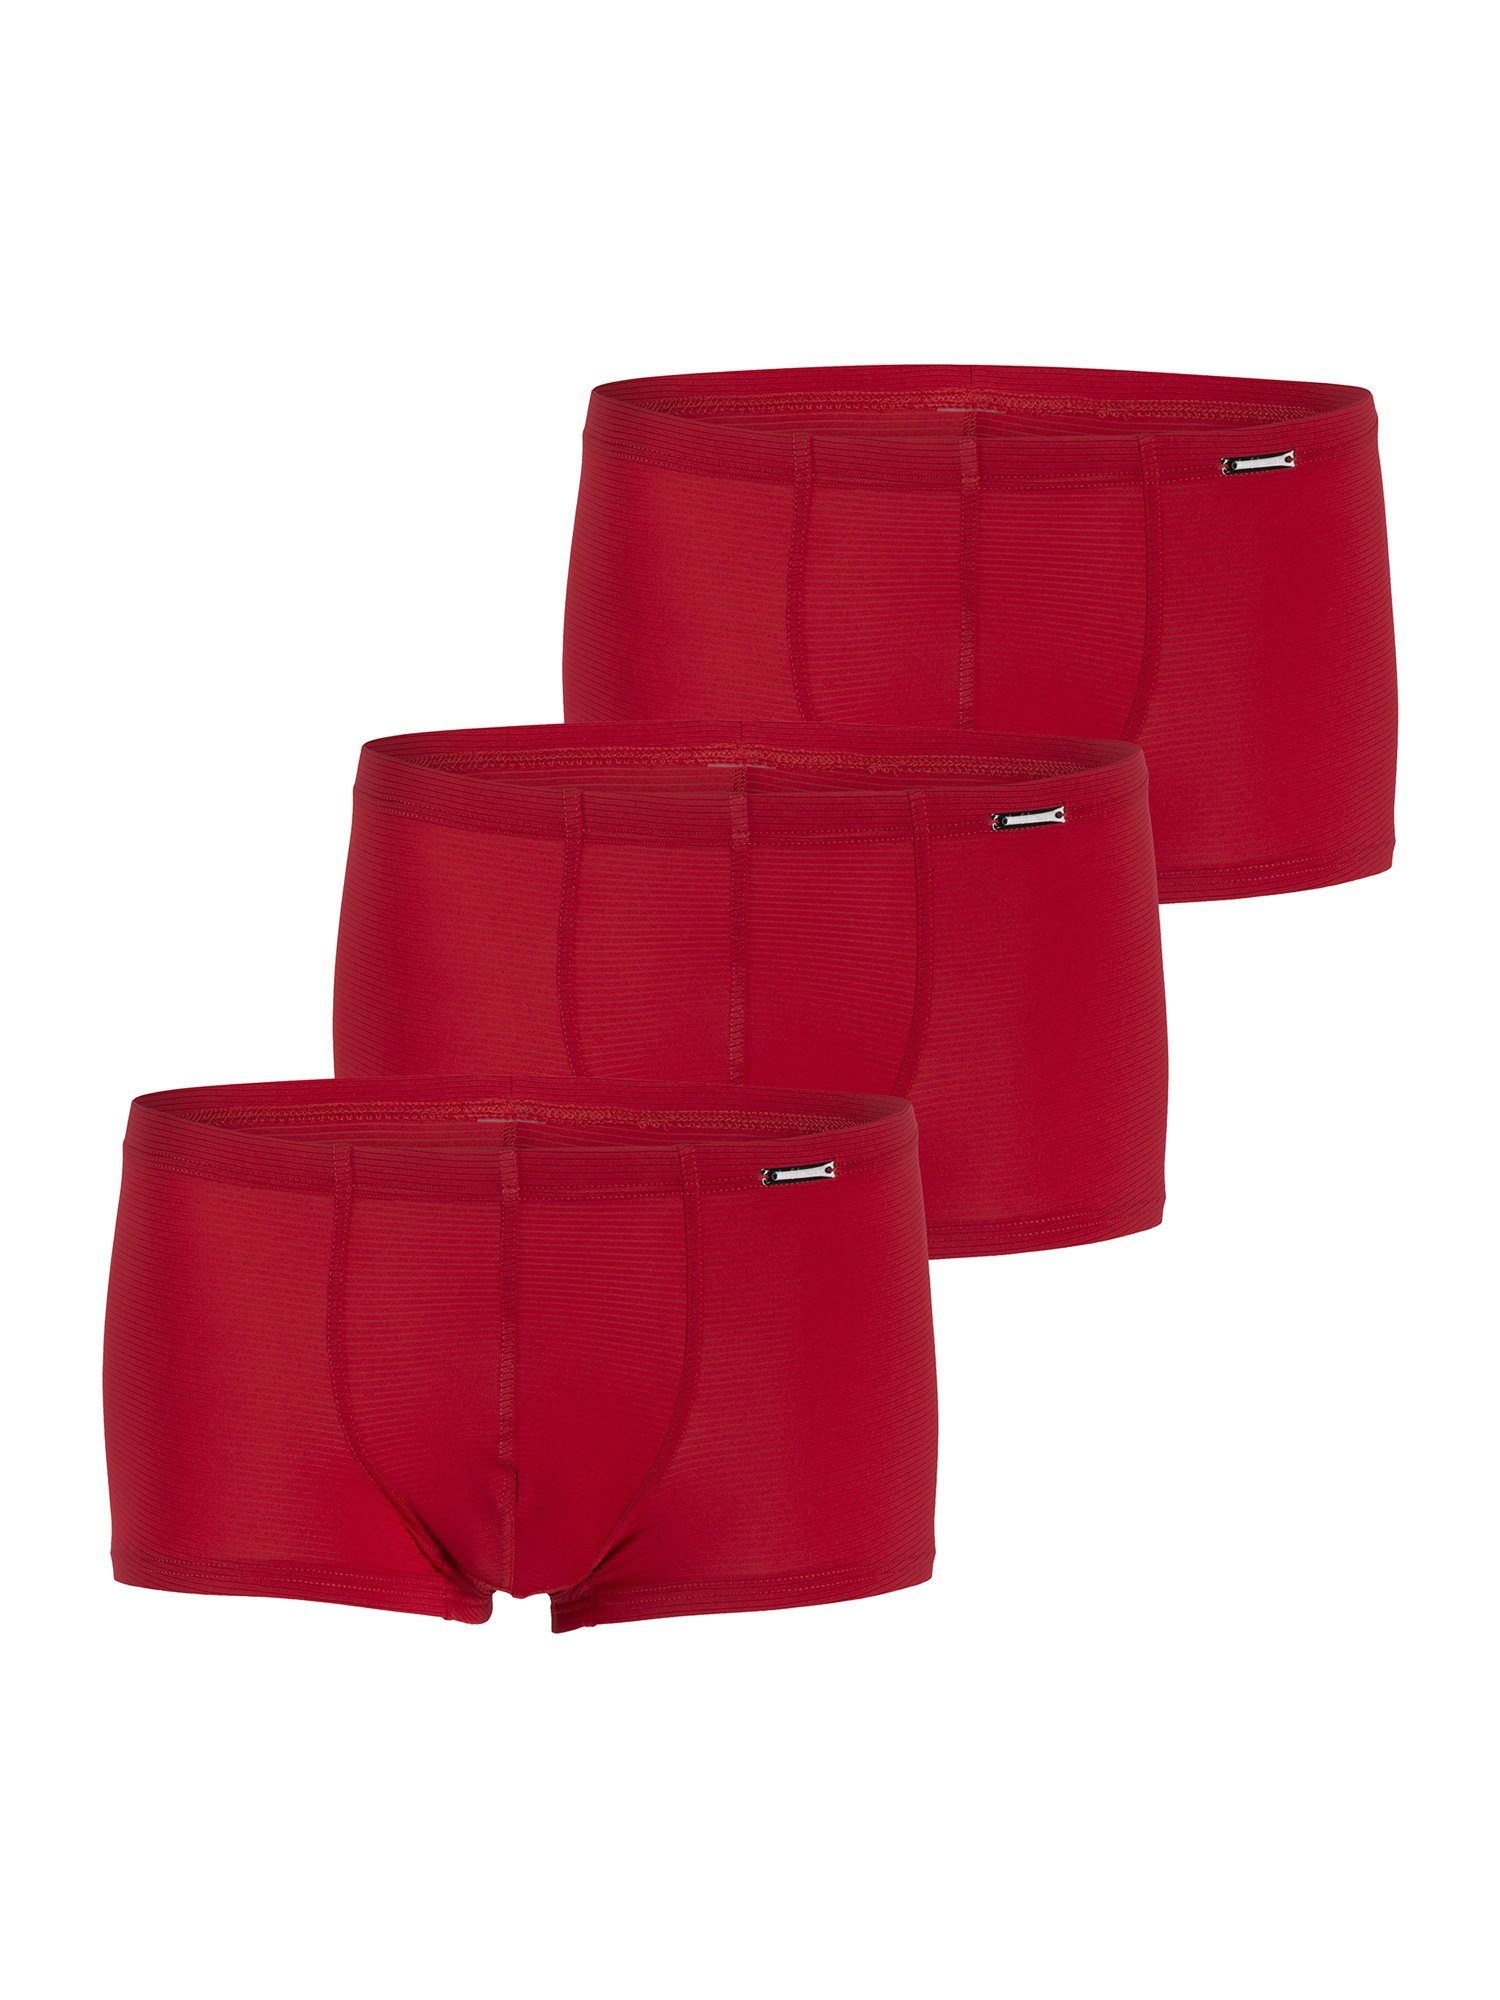 Olaf Benz Retro Pants RED1201 Minipants (3-St) Retro-Boxer Retro-shorts unterhose rot